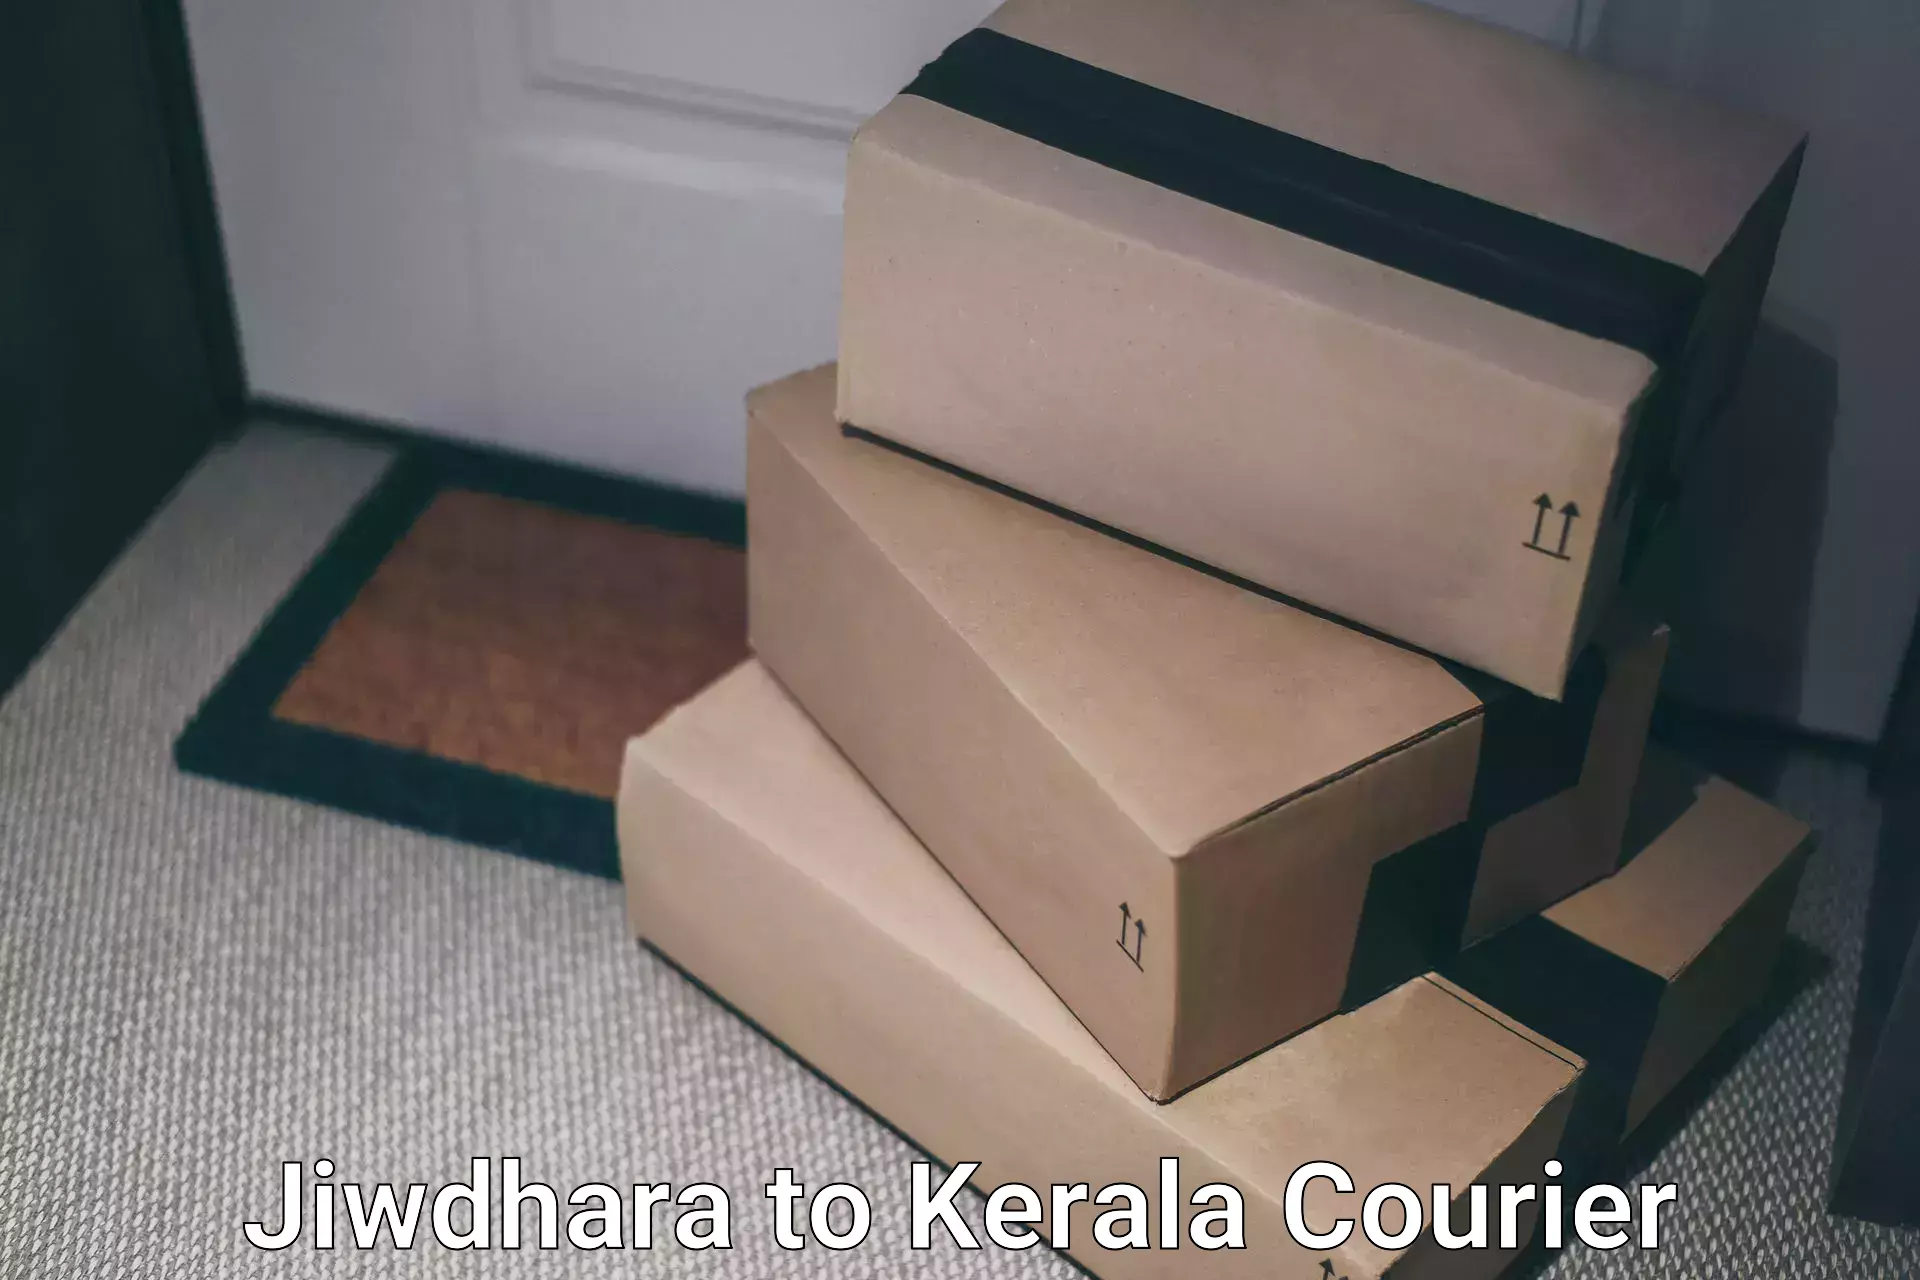 Specialized shipment handling in Jiwdhara to Kerala